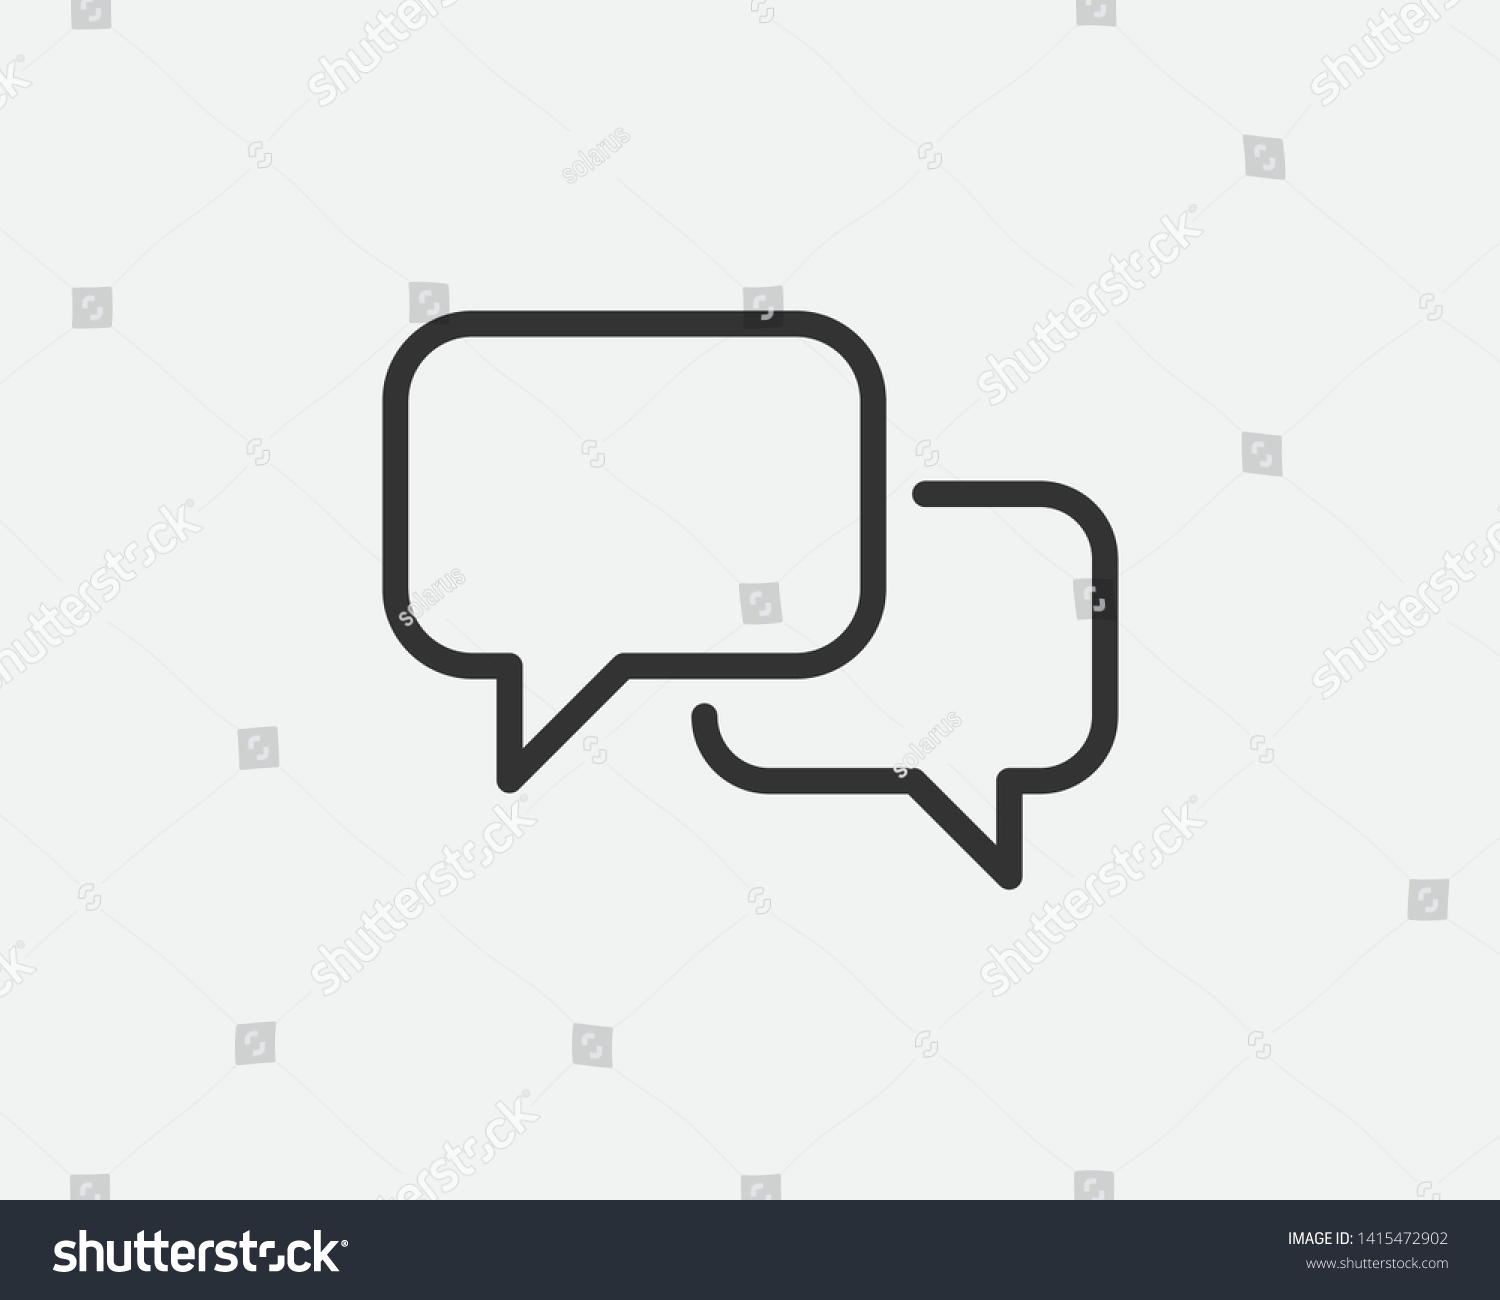 Talk bubble speech icon. Blank empty bubbles vector design elements. Chat on line symbol template. Dialogue balloon sticker silhouette.  #1415472902